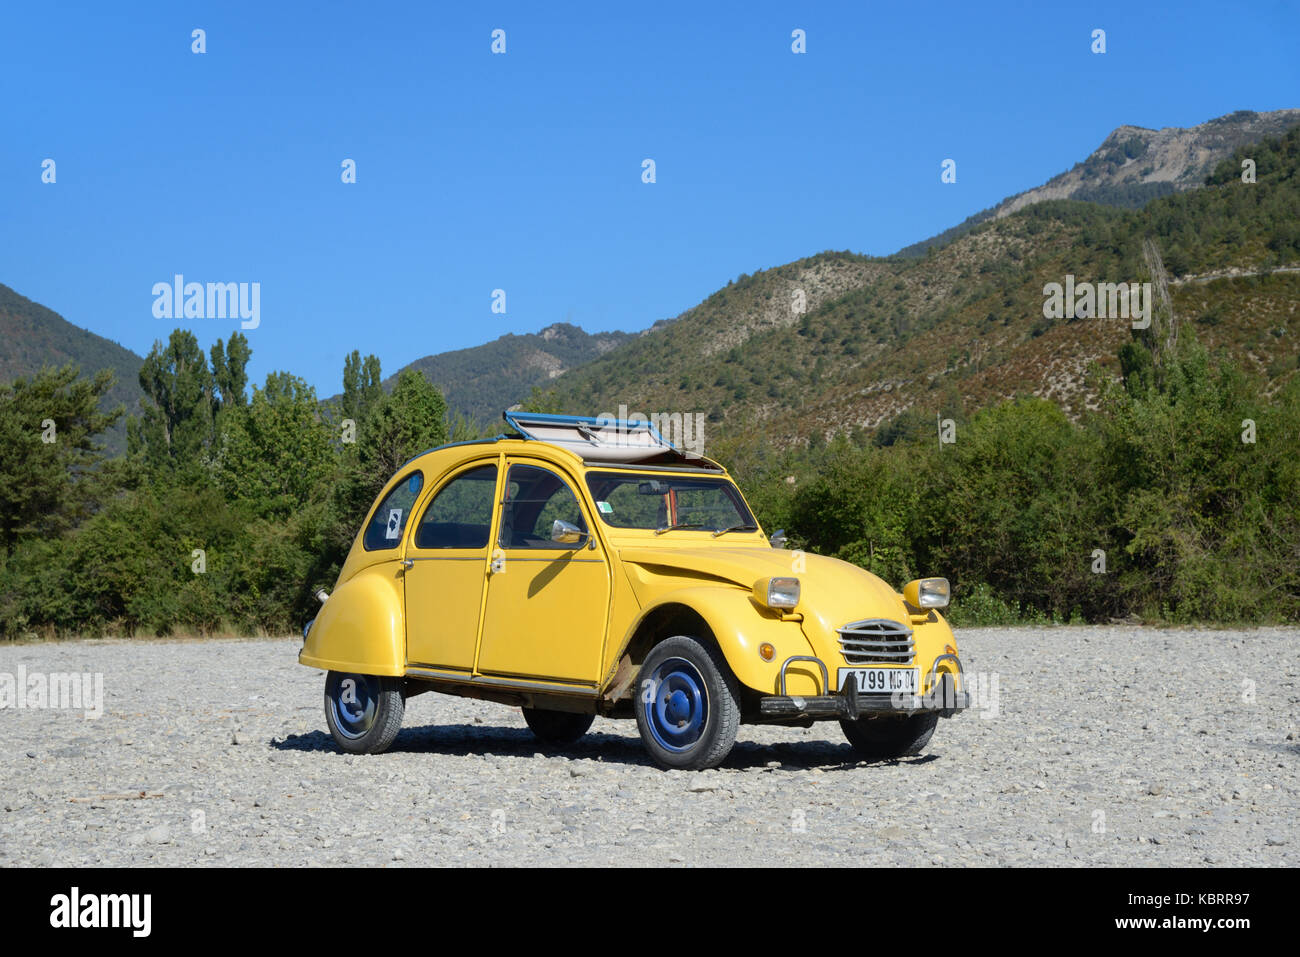 Yellow Citroën 2CV Vintage or Veteran Car or French Automobile Stock Photo